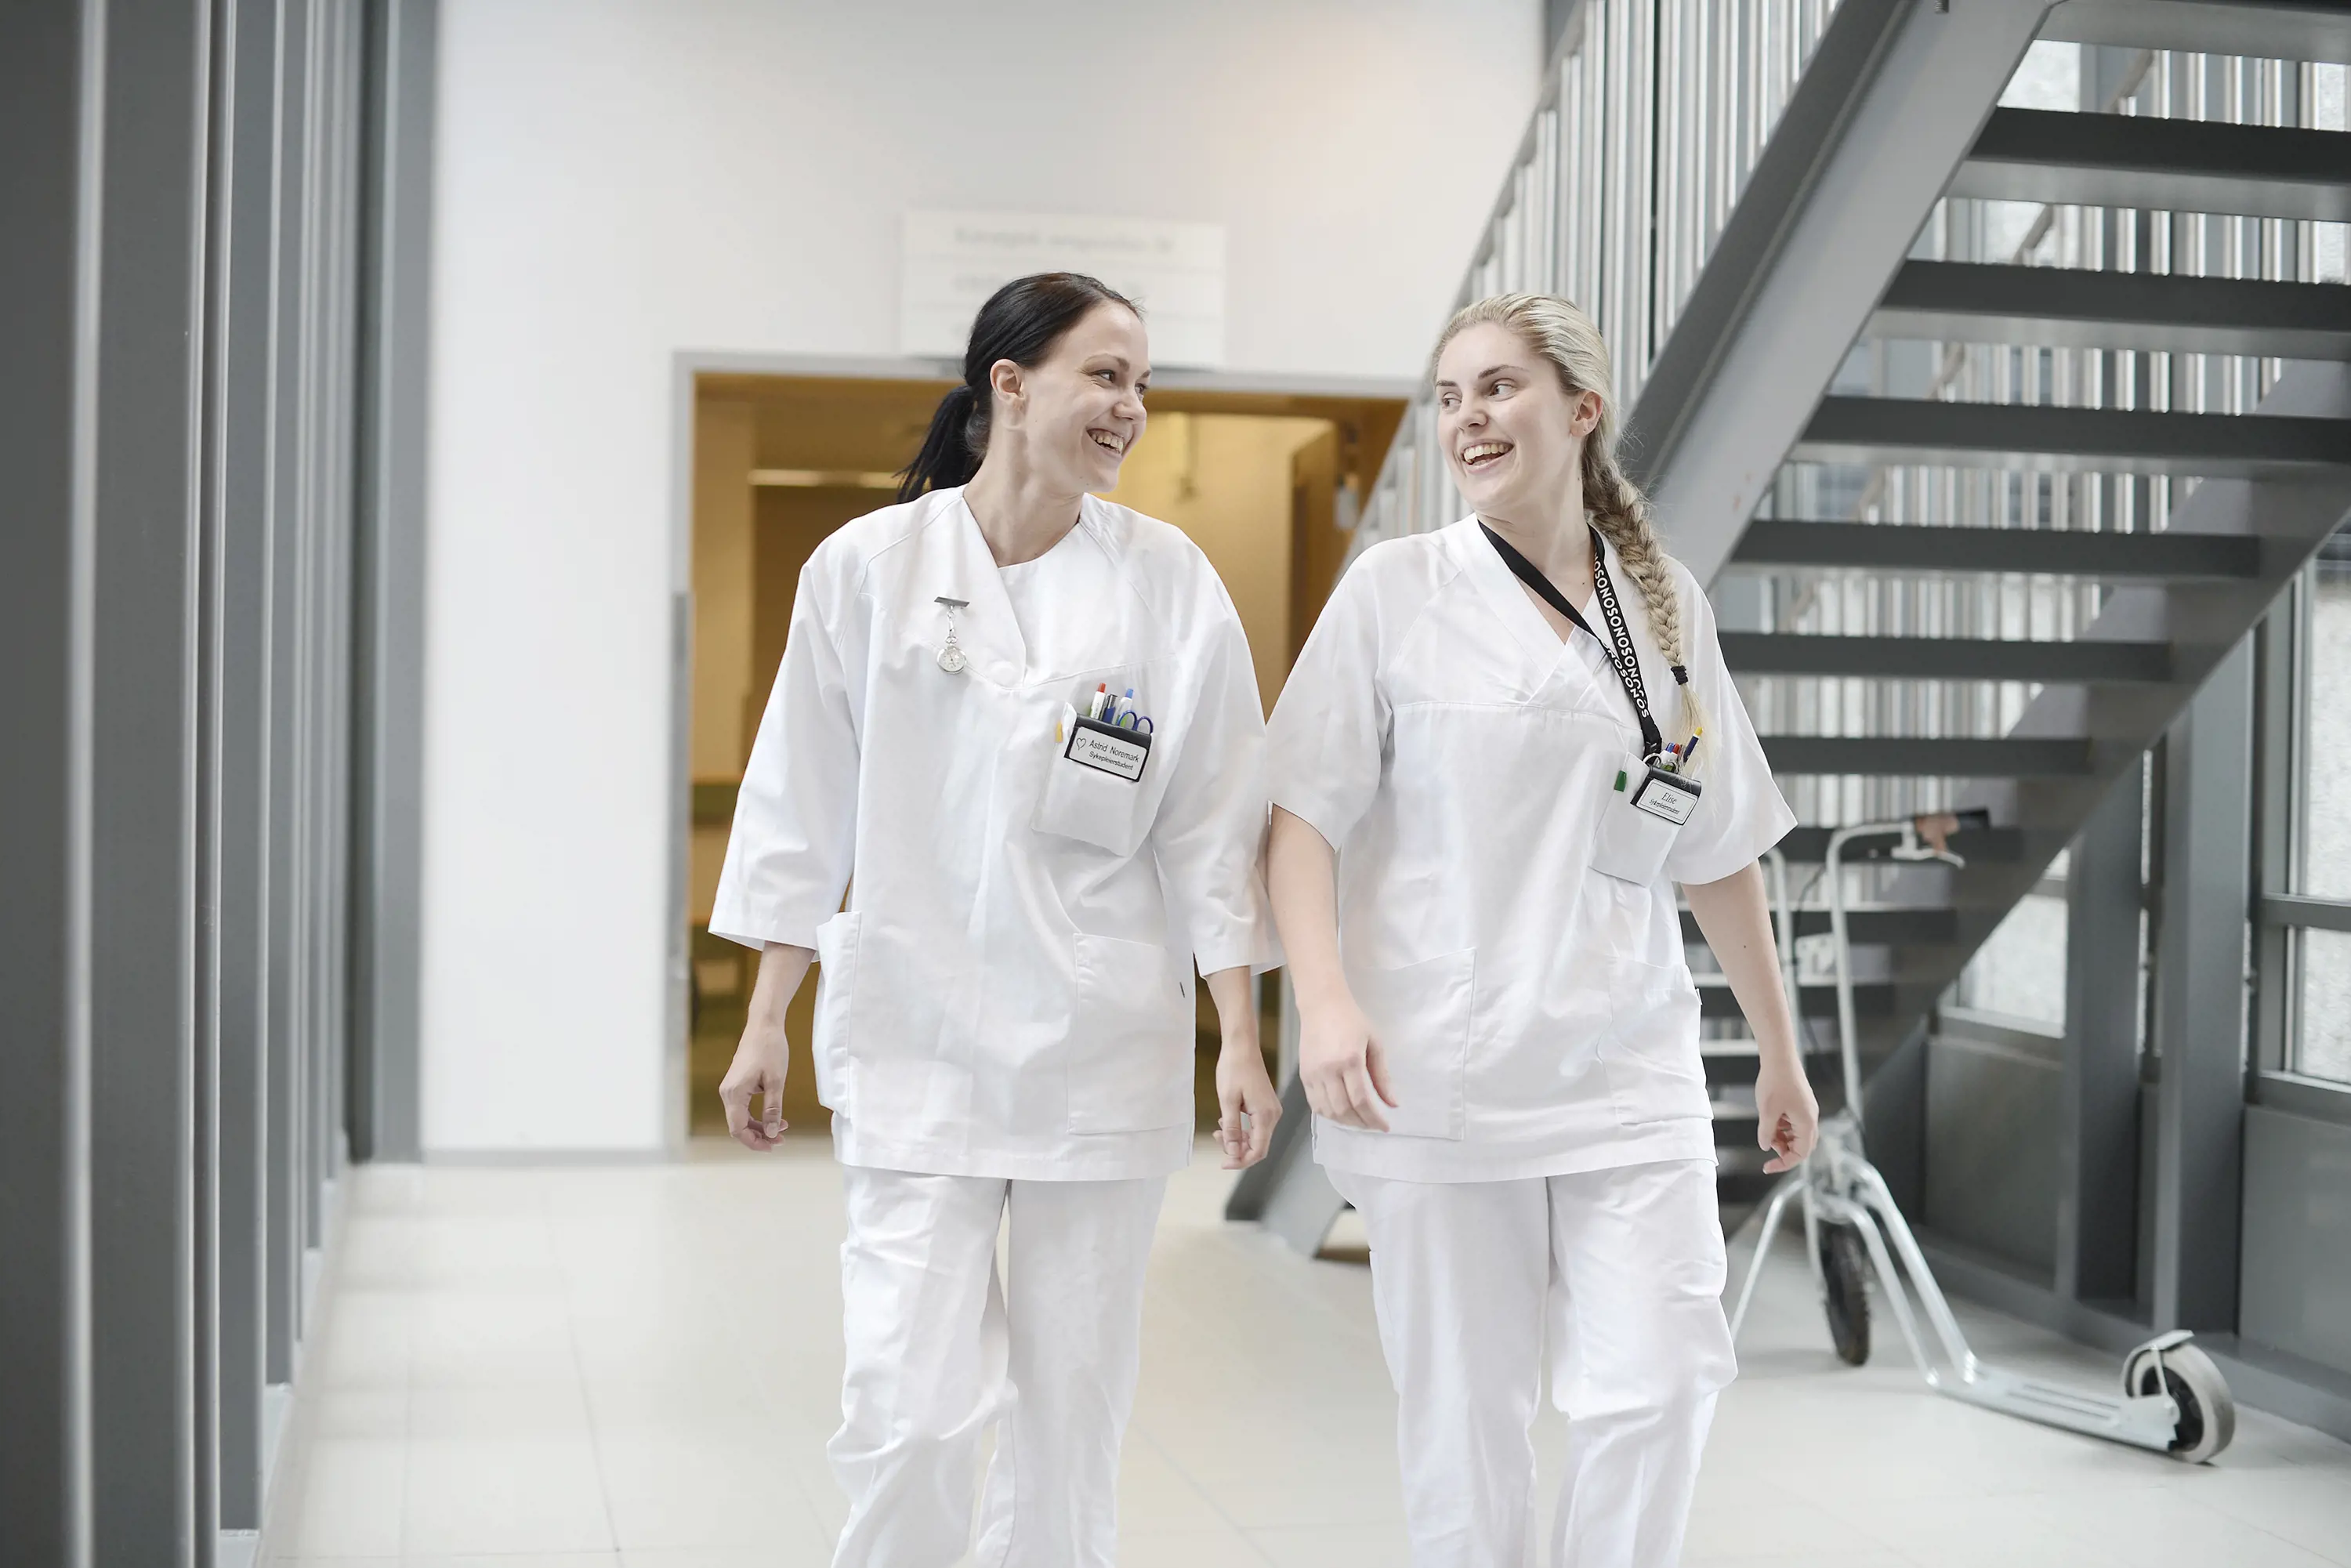 Two nurses walking in hospital hallway. Photo.